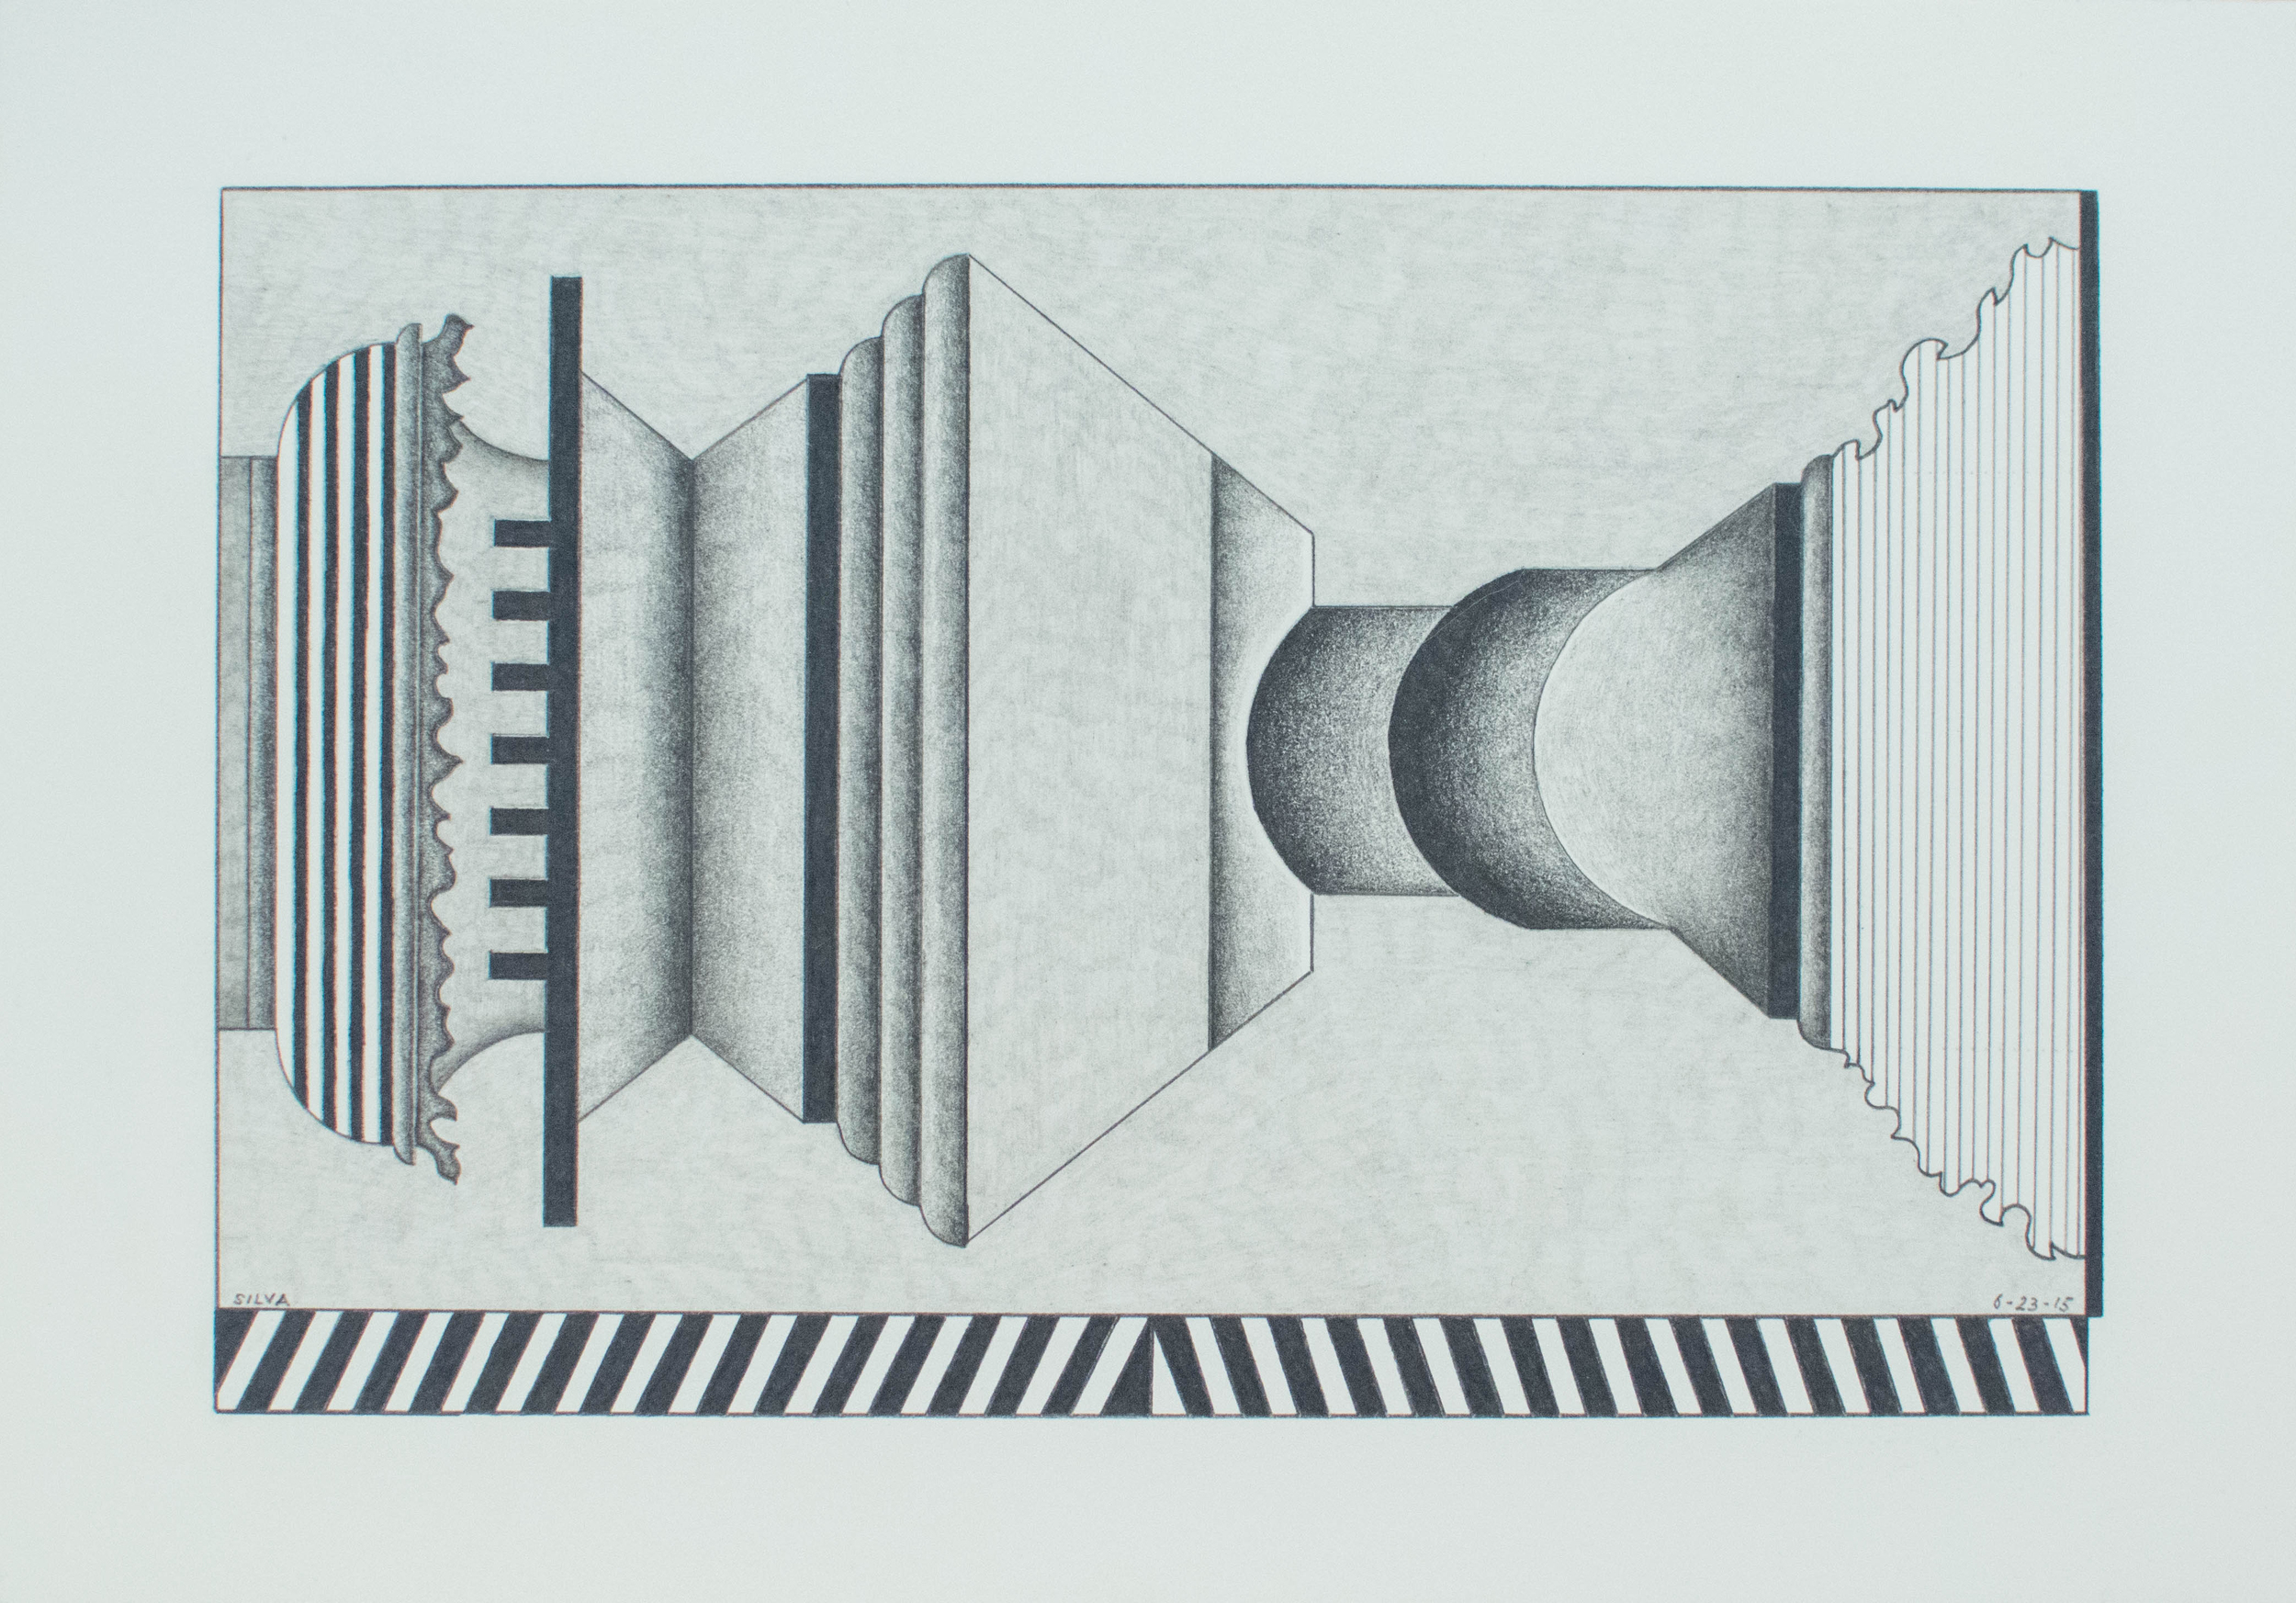 6-23-15, 2015, Graphite on paper, 7 x 10 inches